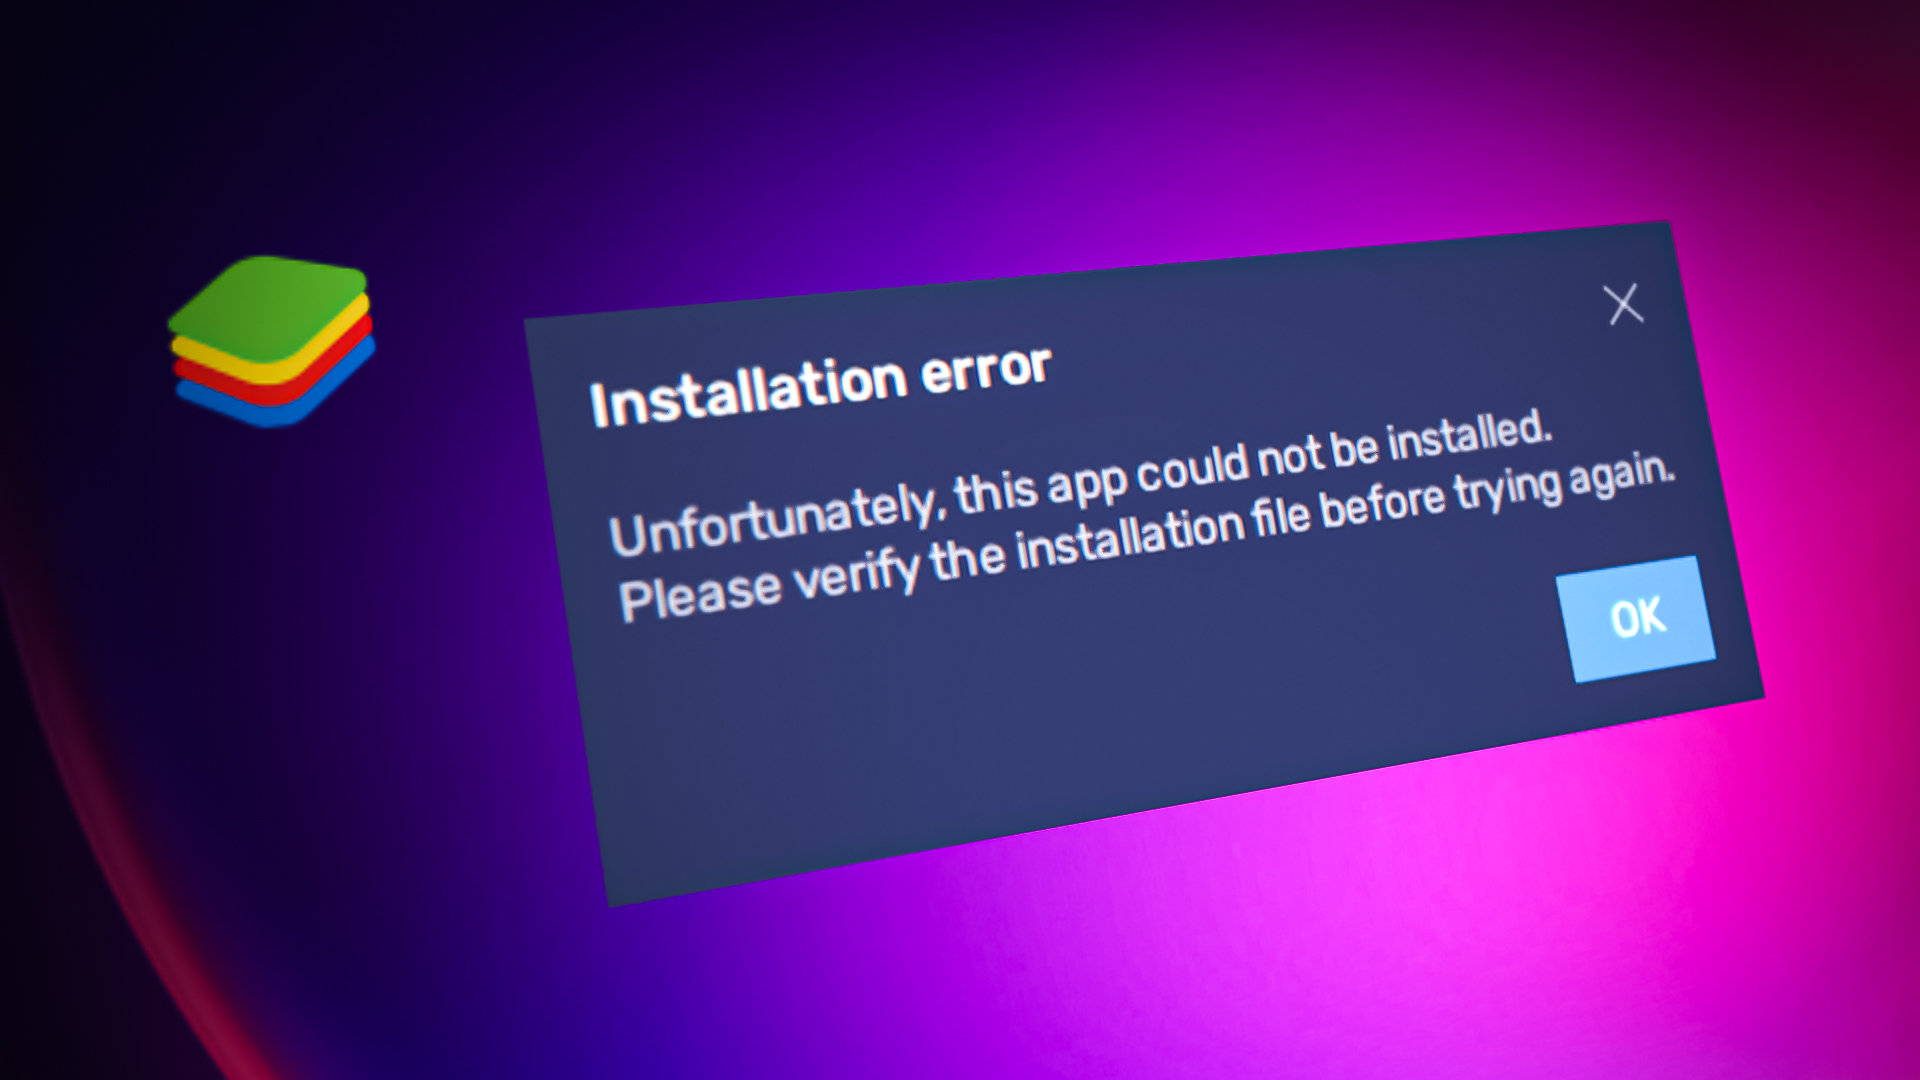 How To Fix Installation Error In Bluestacks On Windows